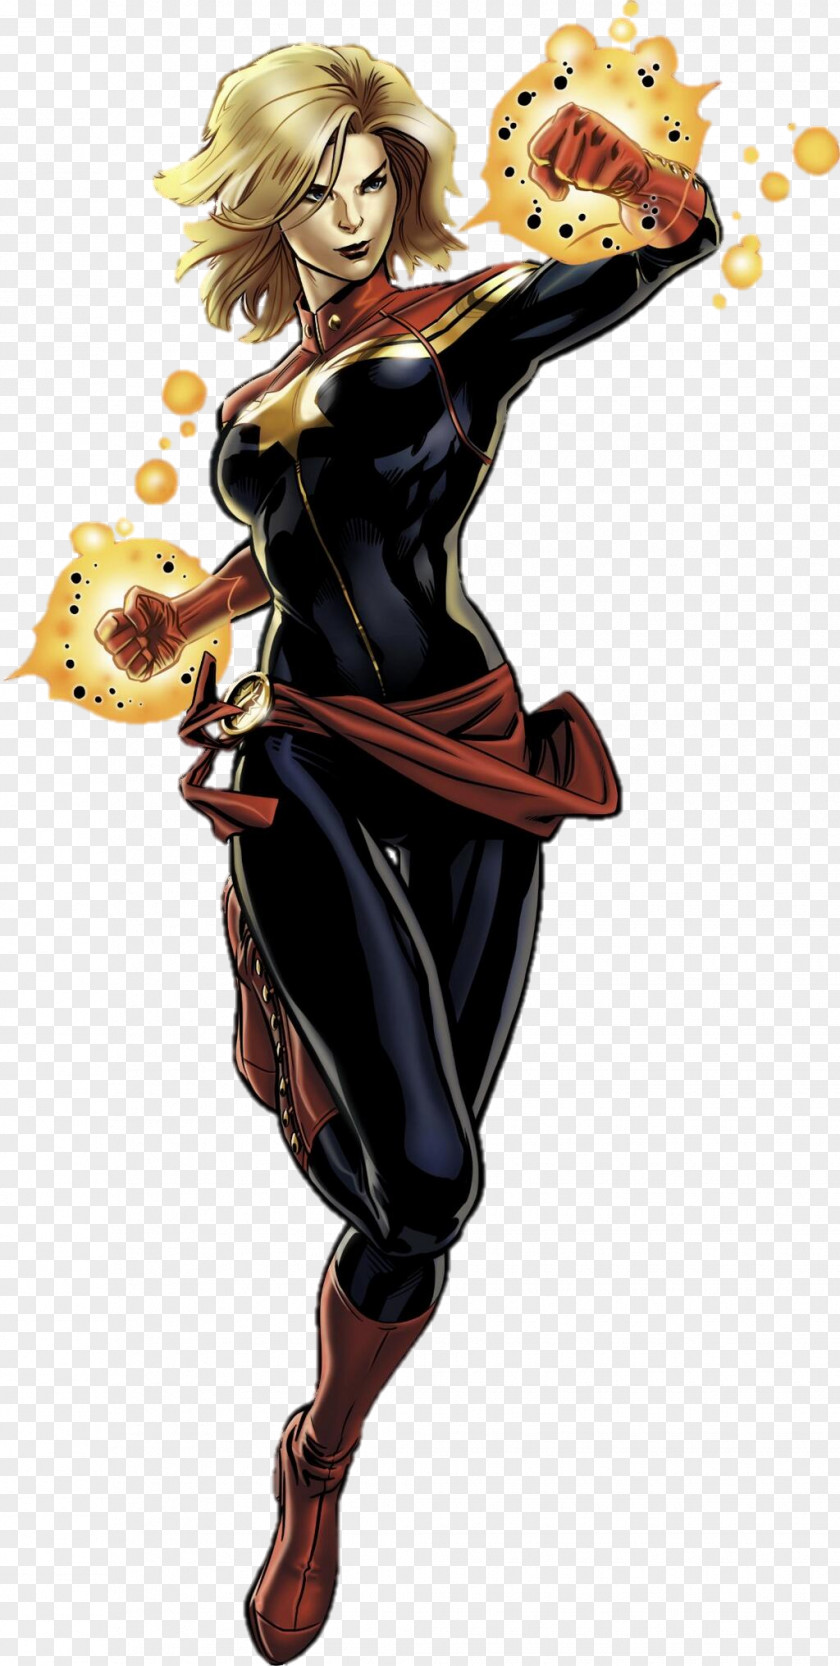 Captain Marvel Transparent Background Marvel: Avengers Alliance Carol Danvers Iron Man Hulk America PNG